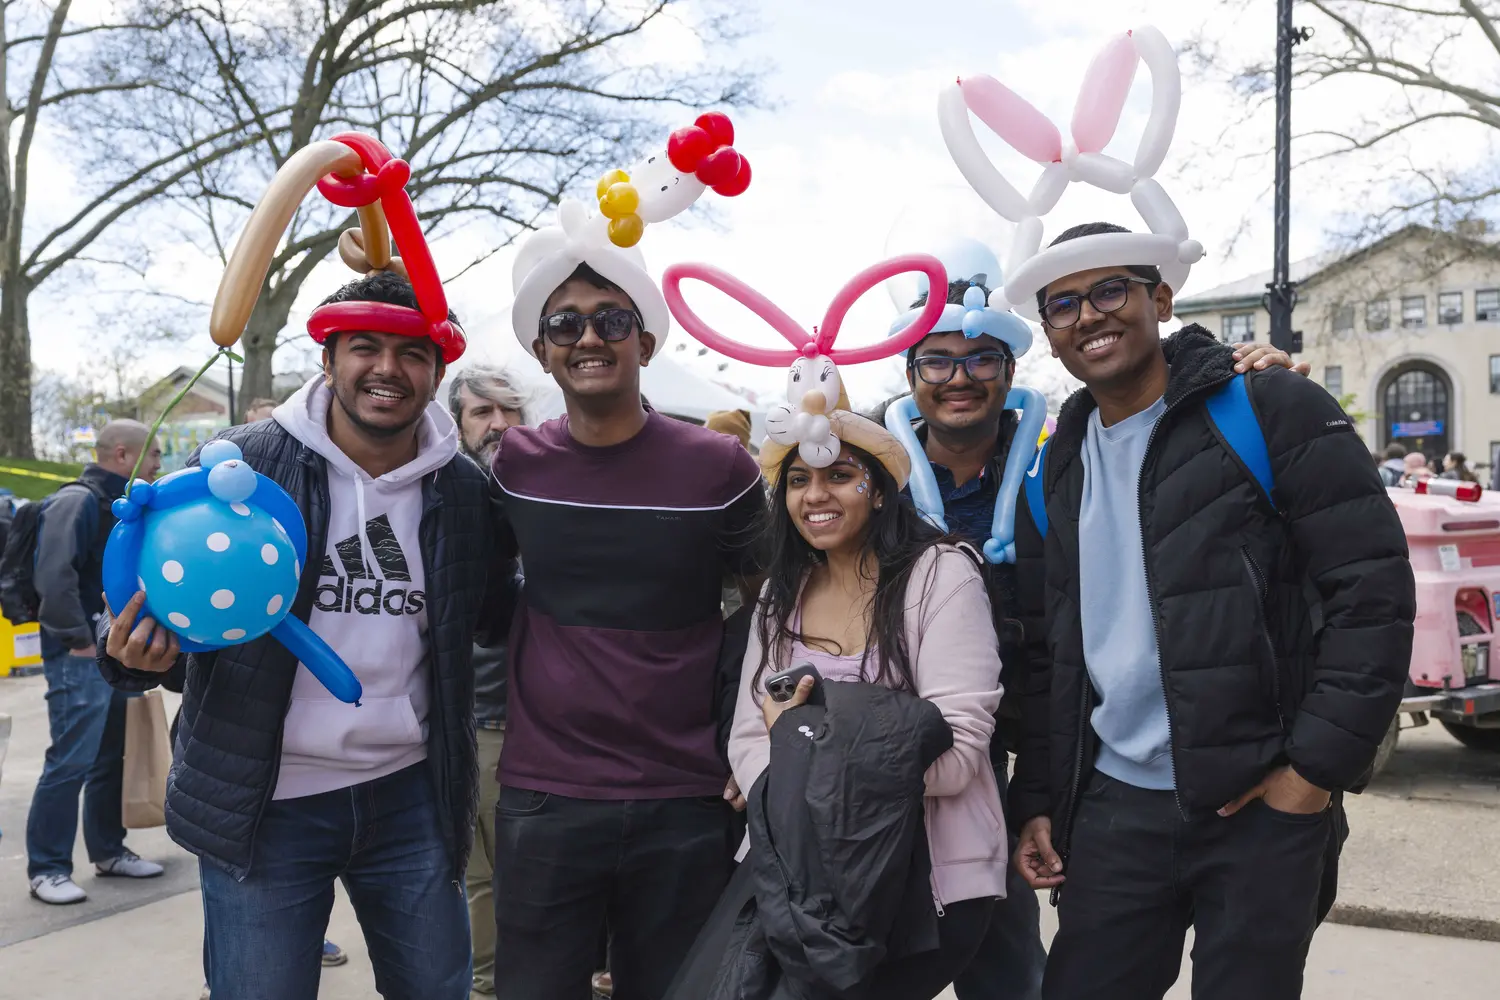 Carnival-goers happily wear ballon animal hats.